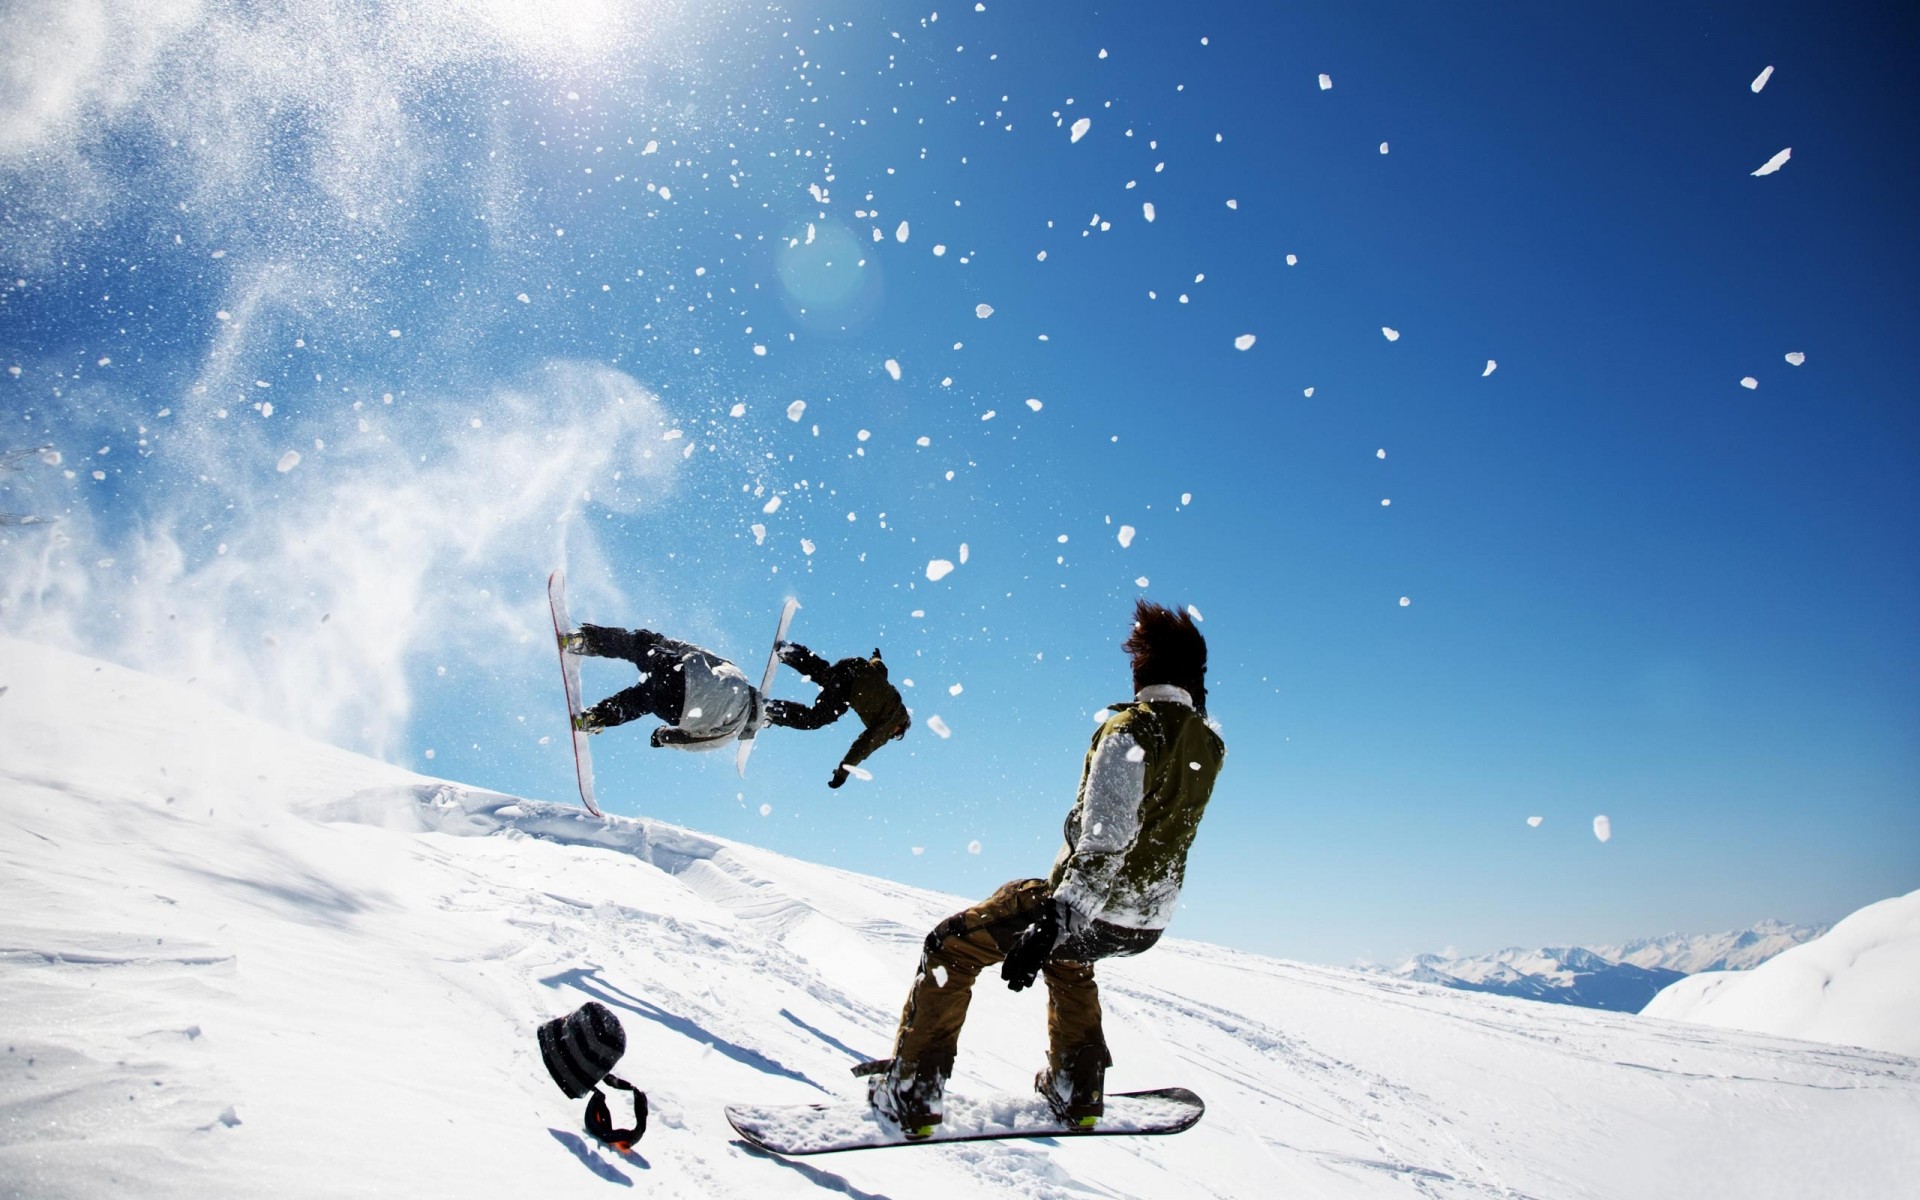 snowboard snow winter skier resort mountain ski resort cold recreation action ski slope ice sport sky